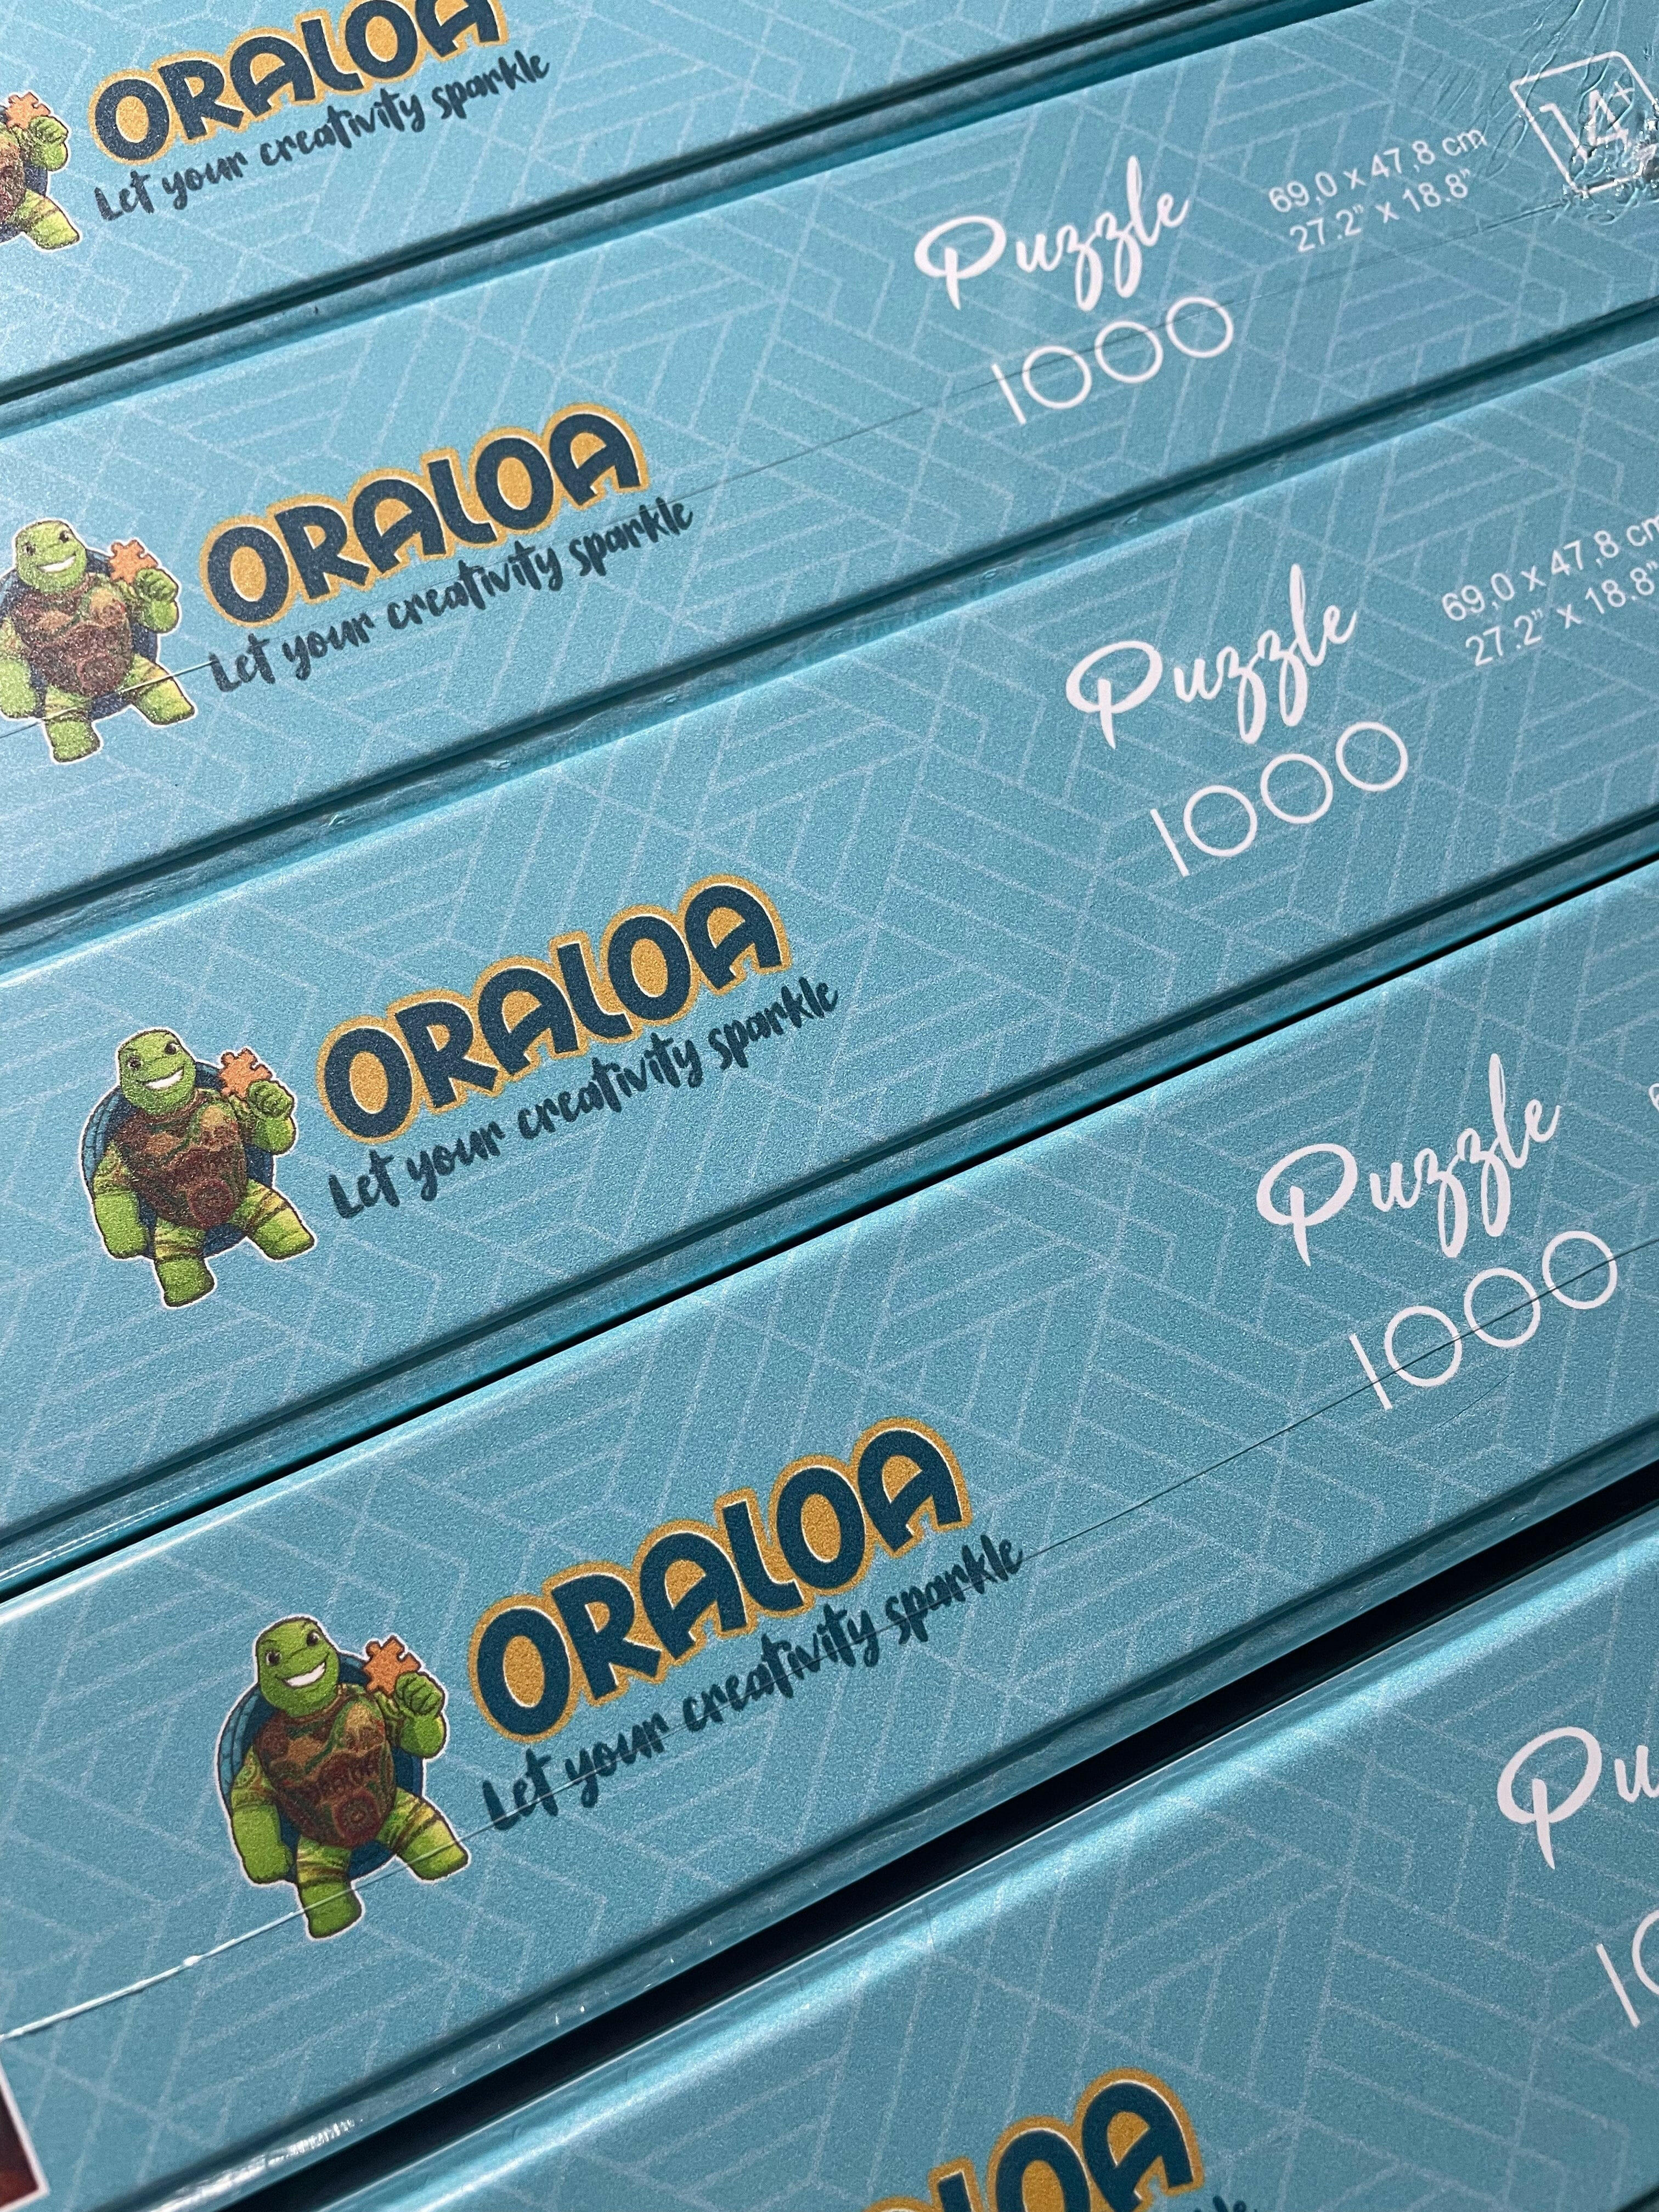 Puzzle 1000 pieces: Just You with Oraloa Oraloa.